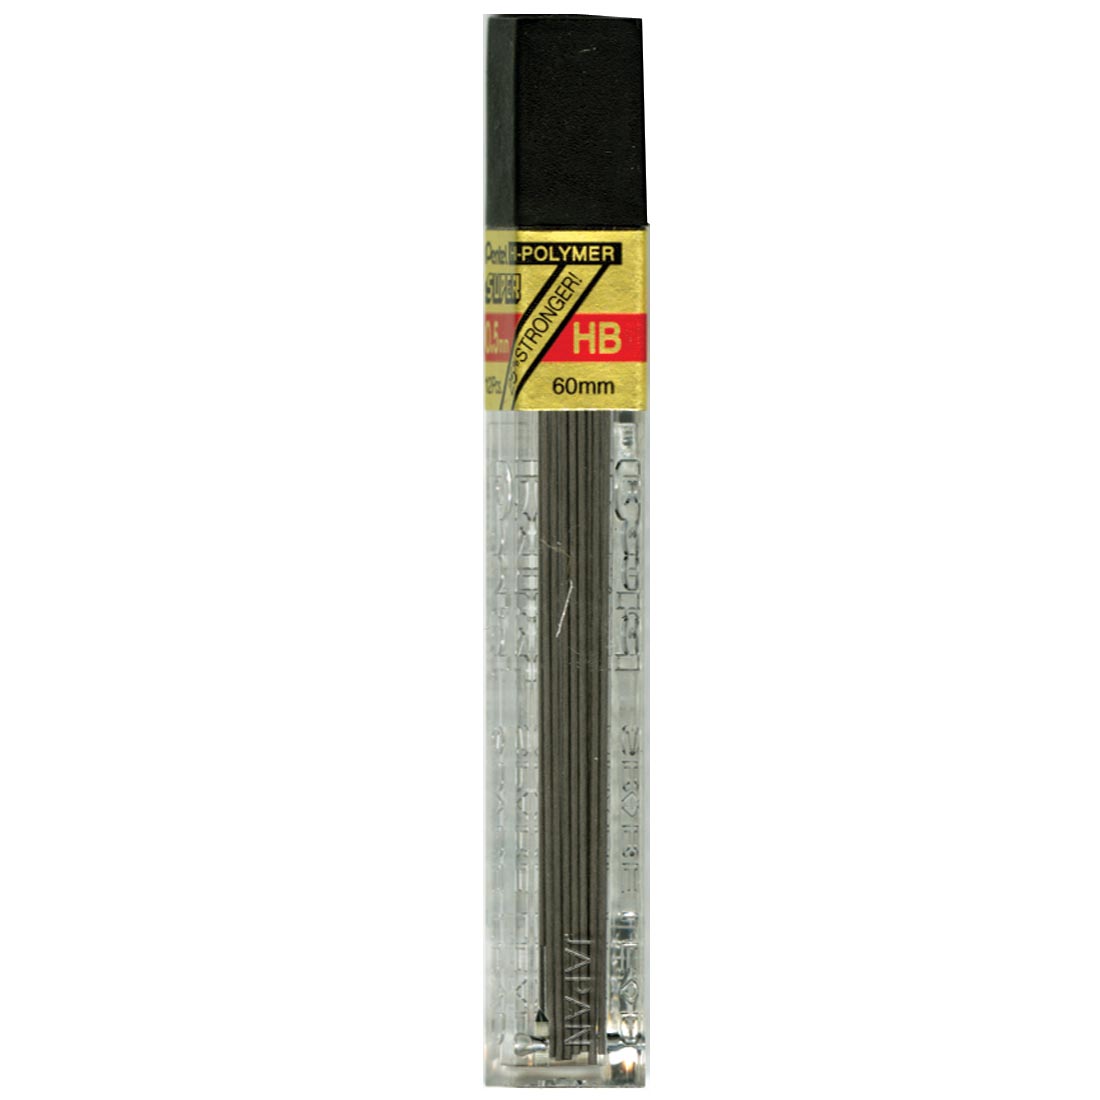 Pentel Super Hi-Polymer Mechanical Pencil Leads